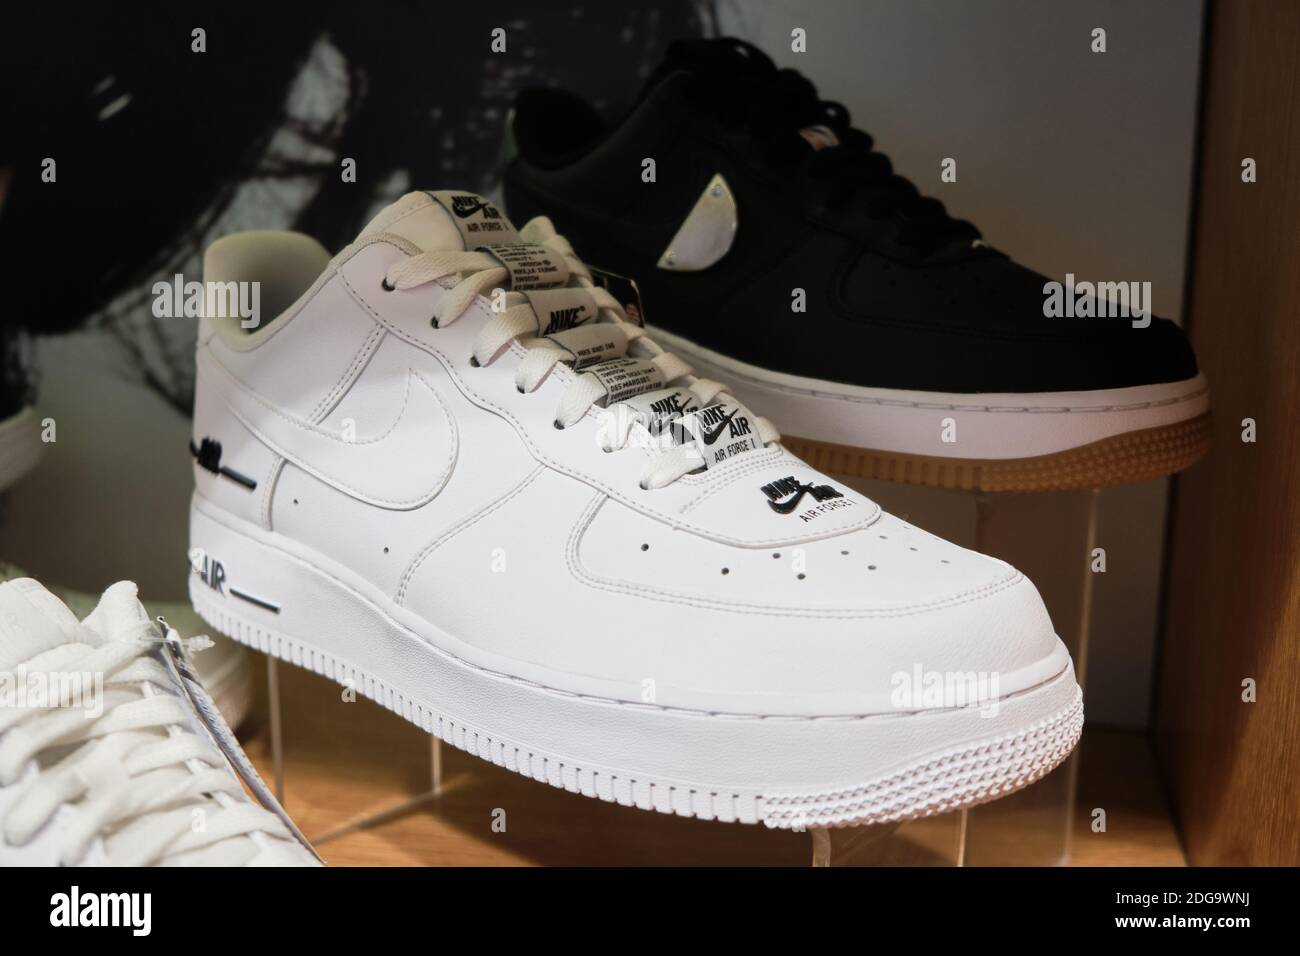 Nike Air Force One Sneaker im Ladenregal. Mersin, Türkei - November 2020  Stockfotografie - Alamy